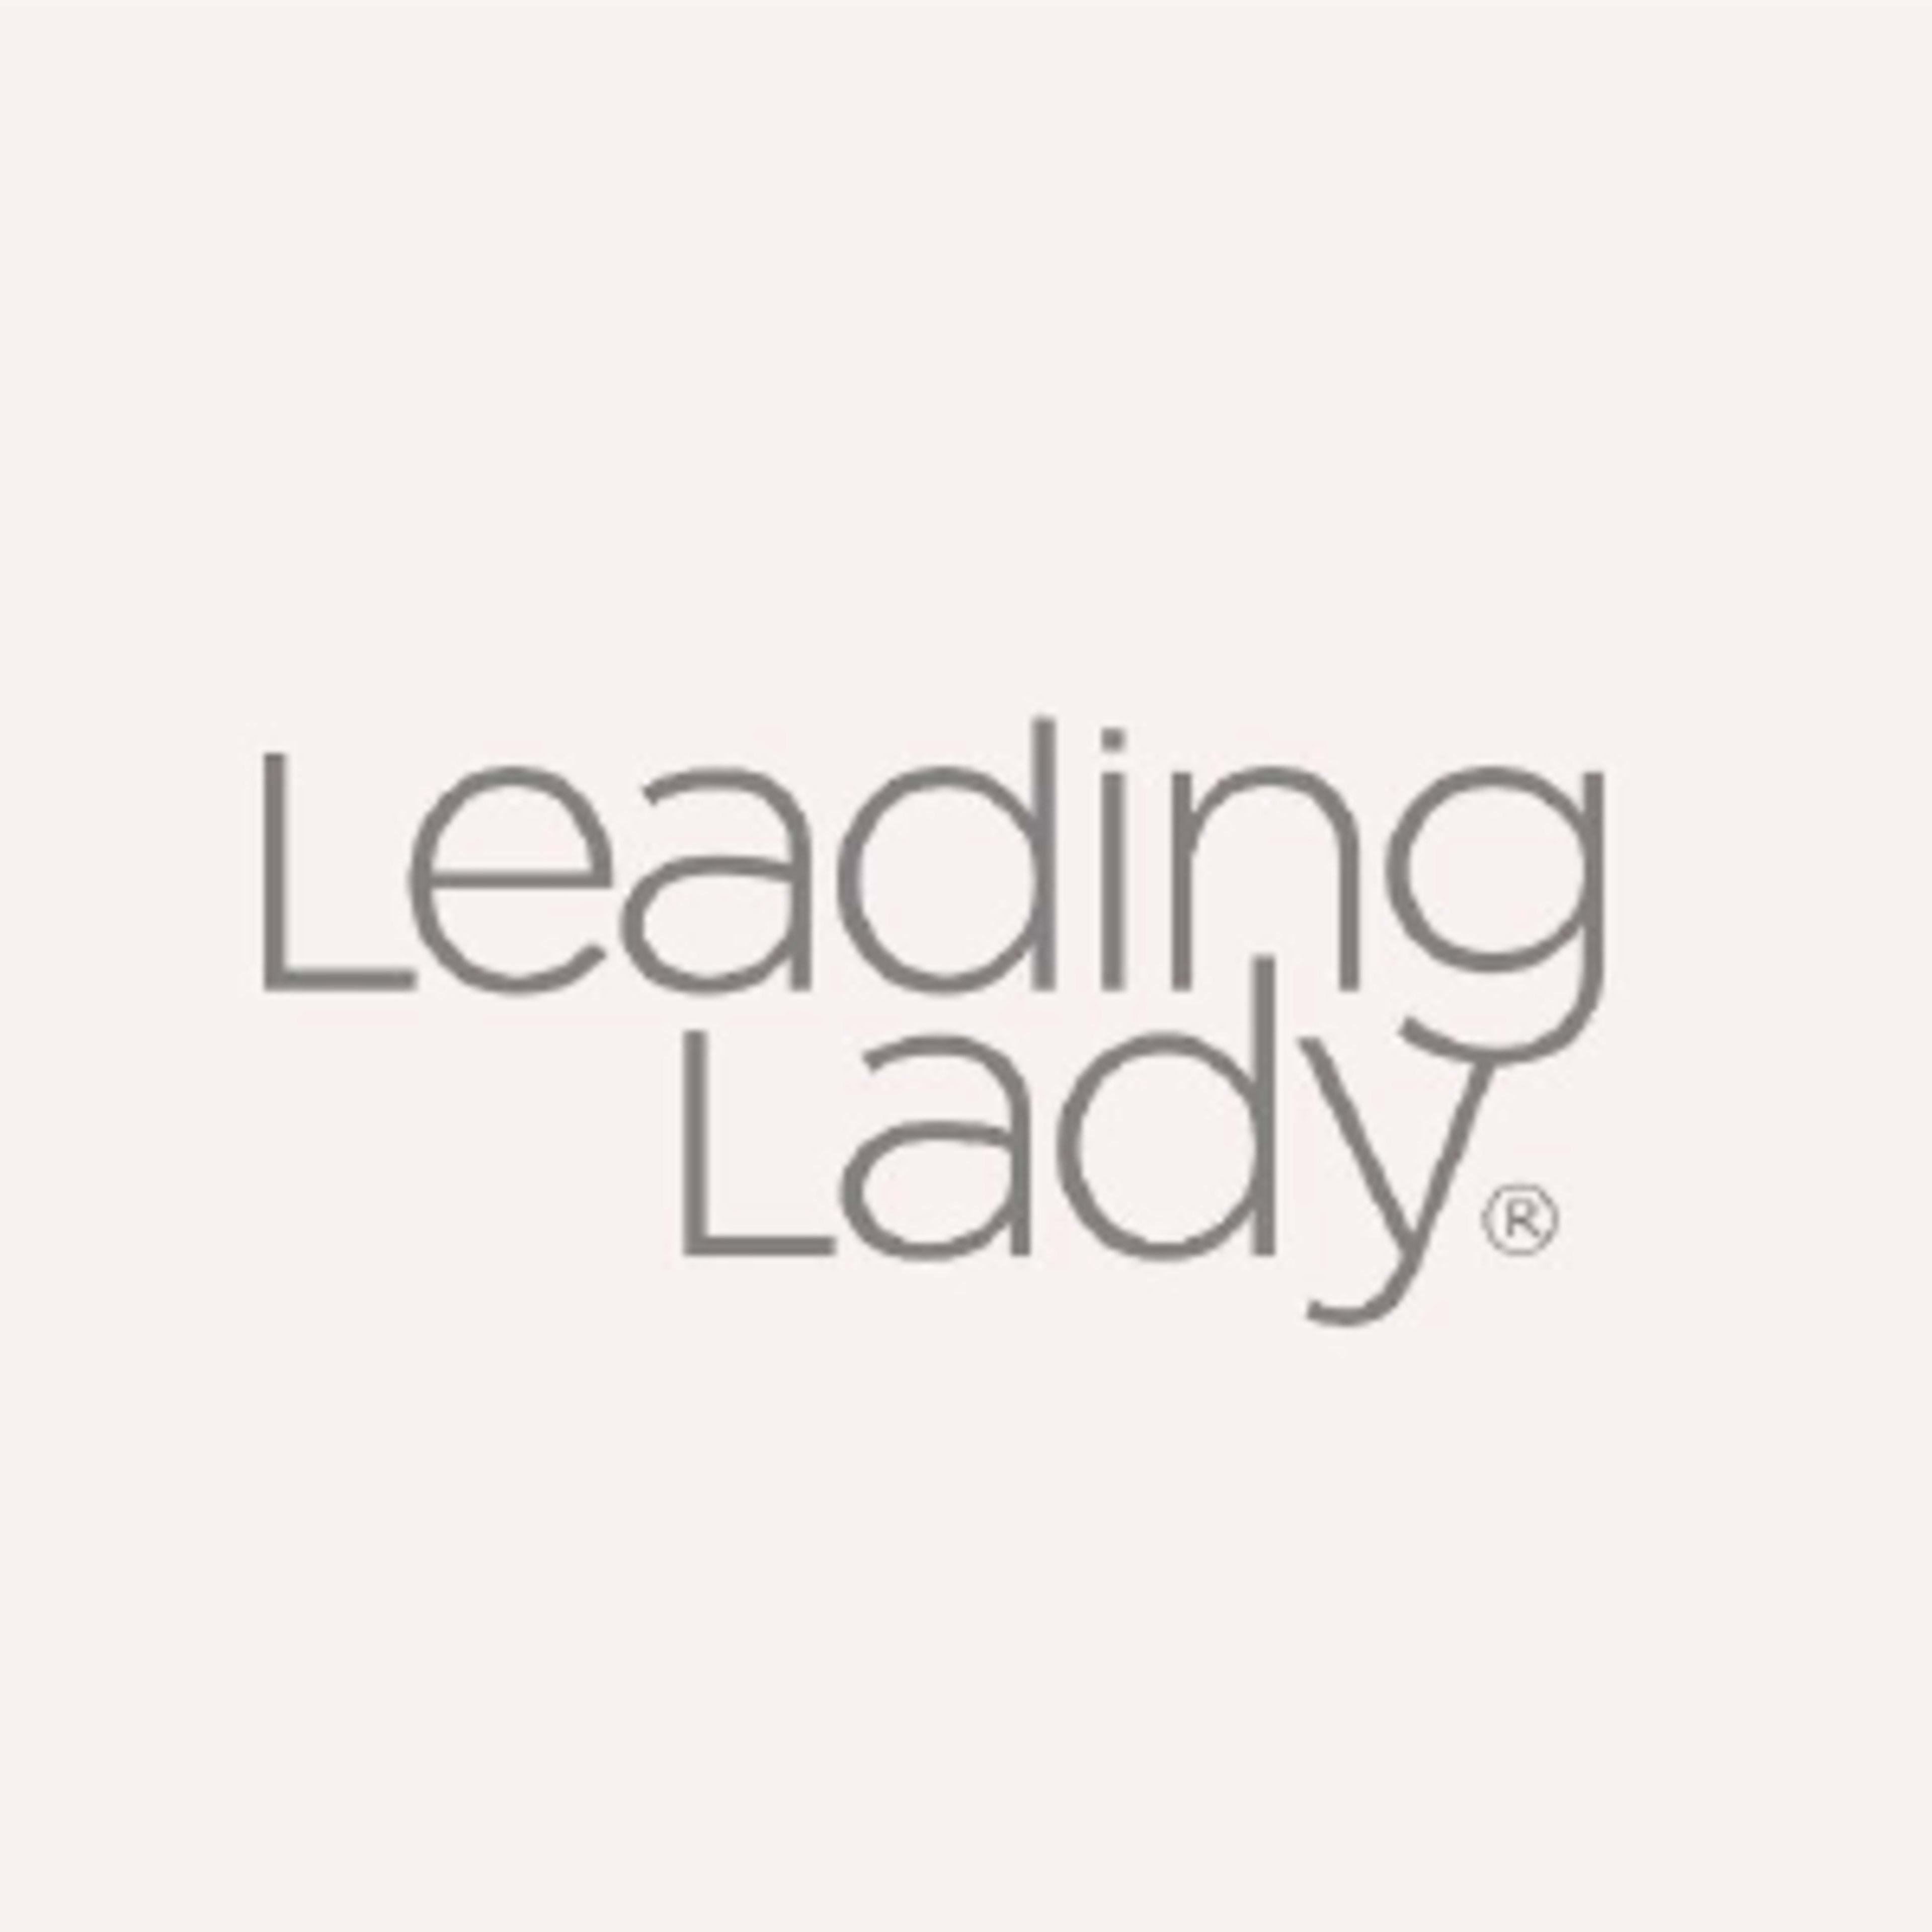 Leading LadyCode